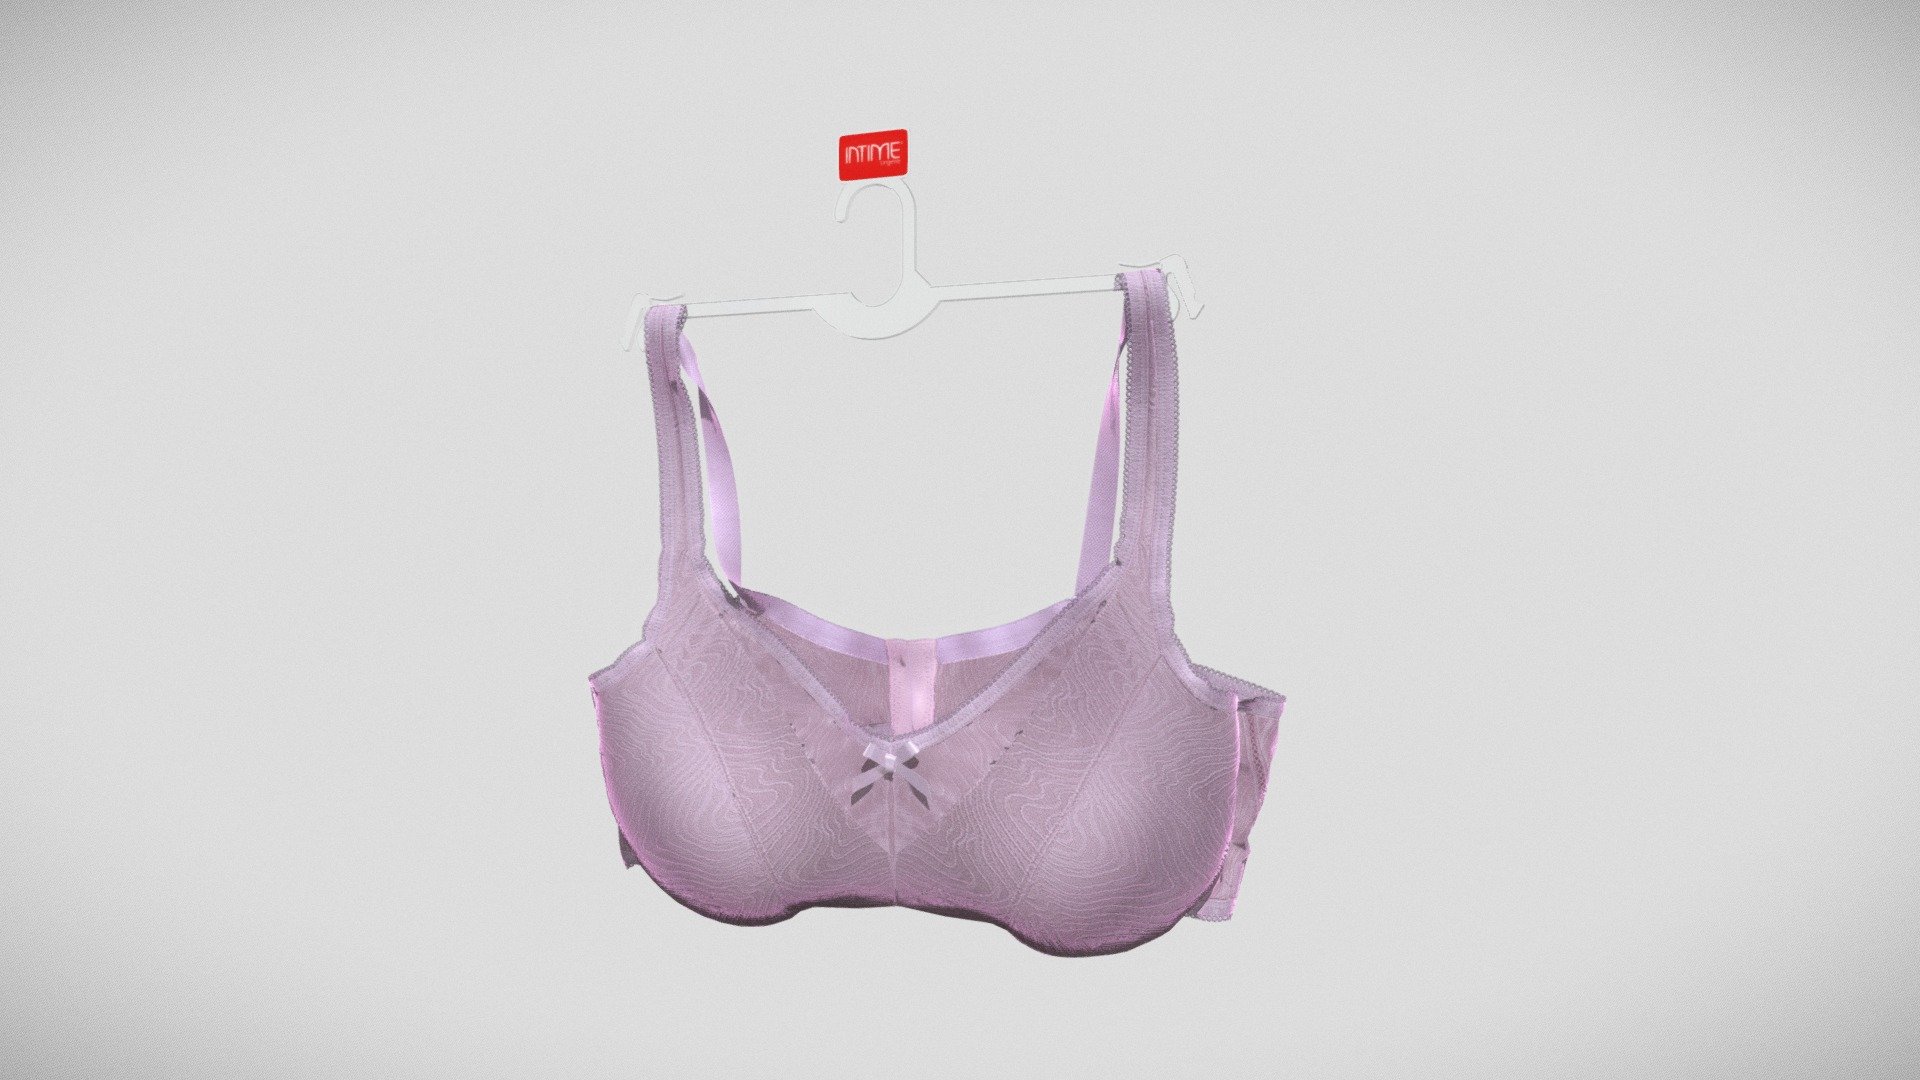 Pink bra for sale in women's underwear stores.

Sostén rosado para venta en locales de venta de ropa interior femenina - Pink Bralette / Sostén Rosado - Buy Royalty Free 3D model by rendermodel 3d model